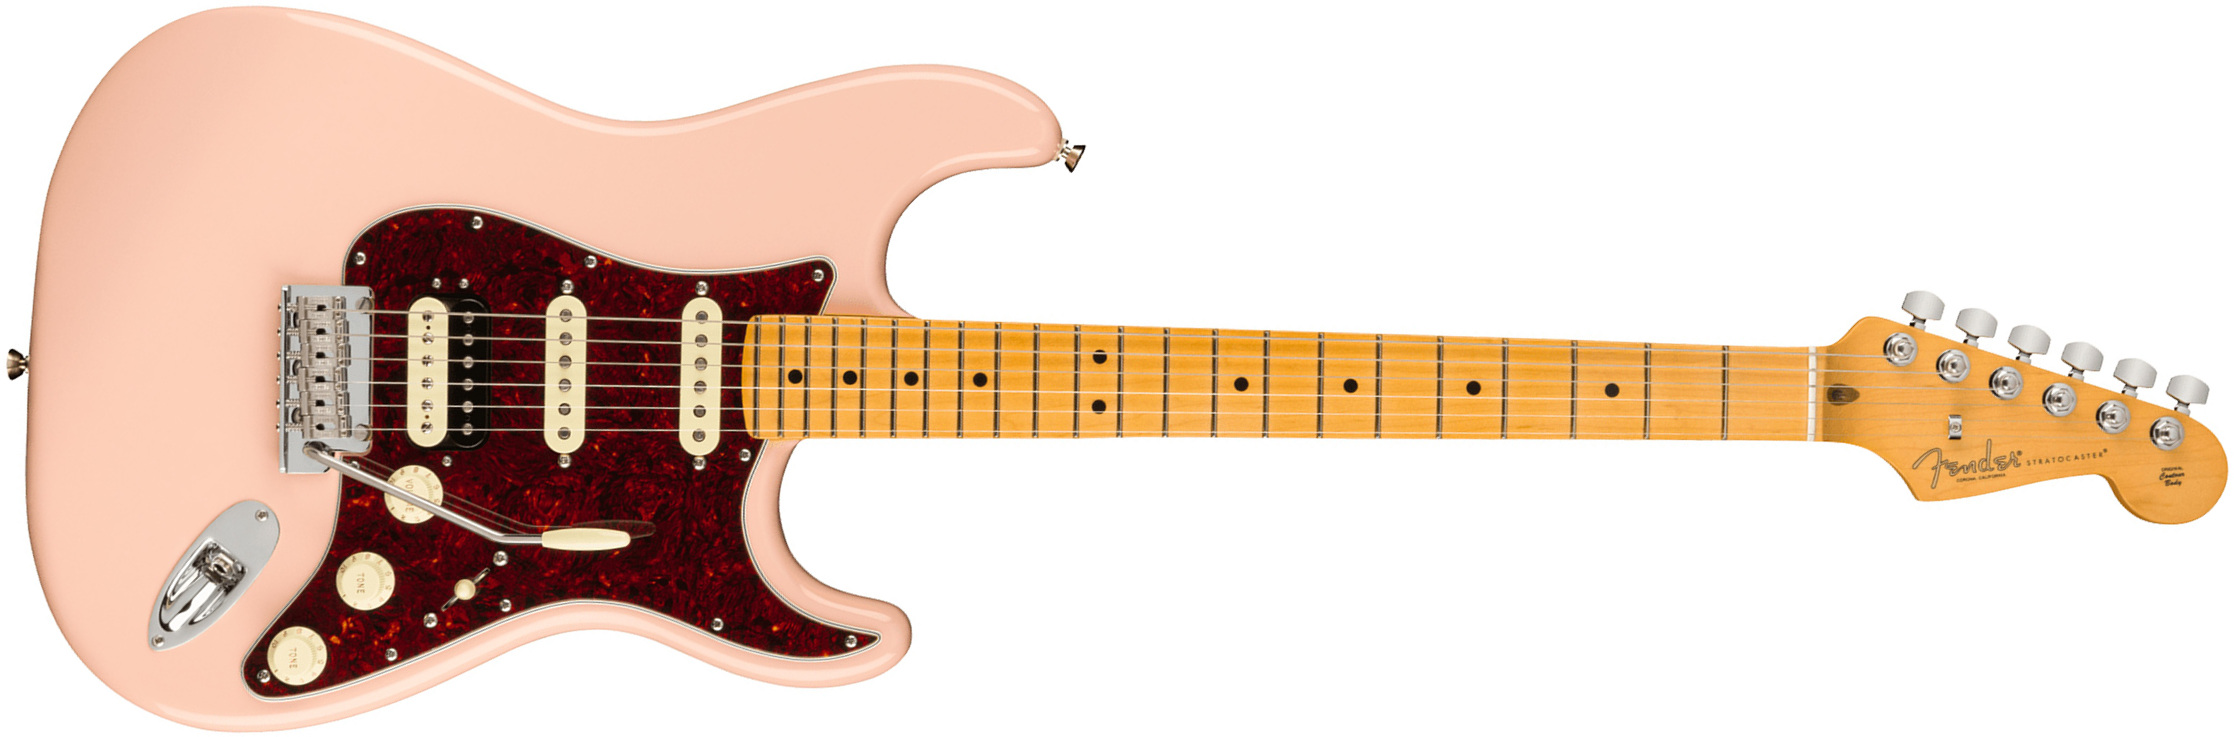 Fender Strat American Pro Ii Ltd Hss Trem Mn - Shell Pink - E-Gitarre in Str-Form - Main picture